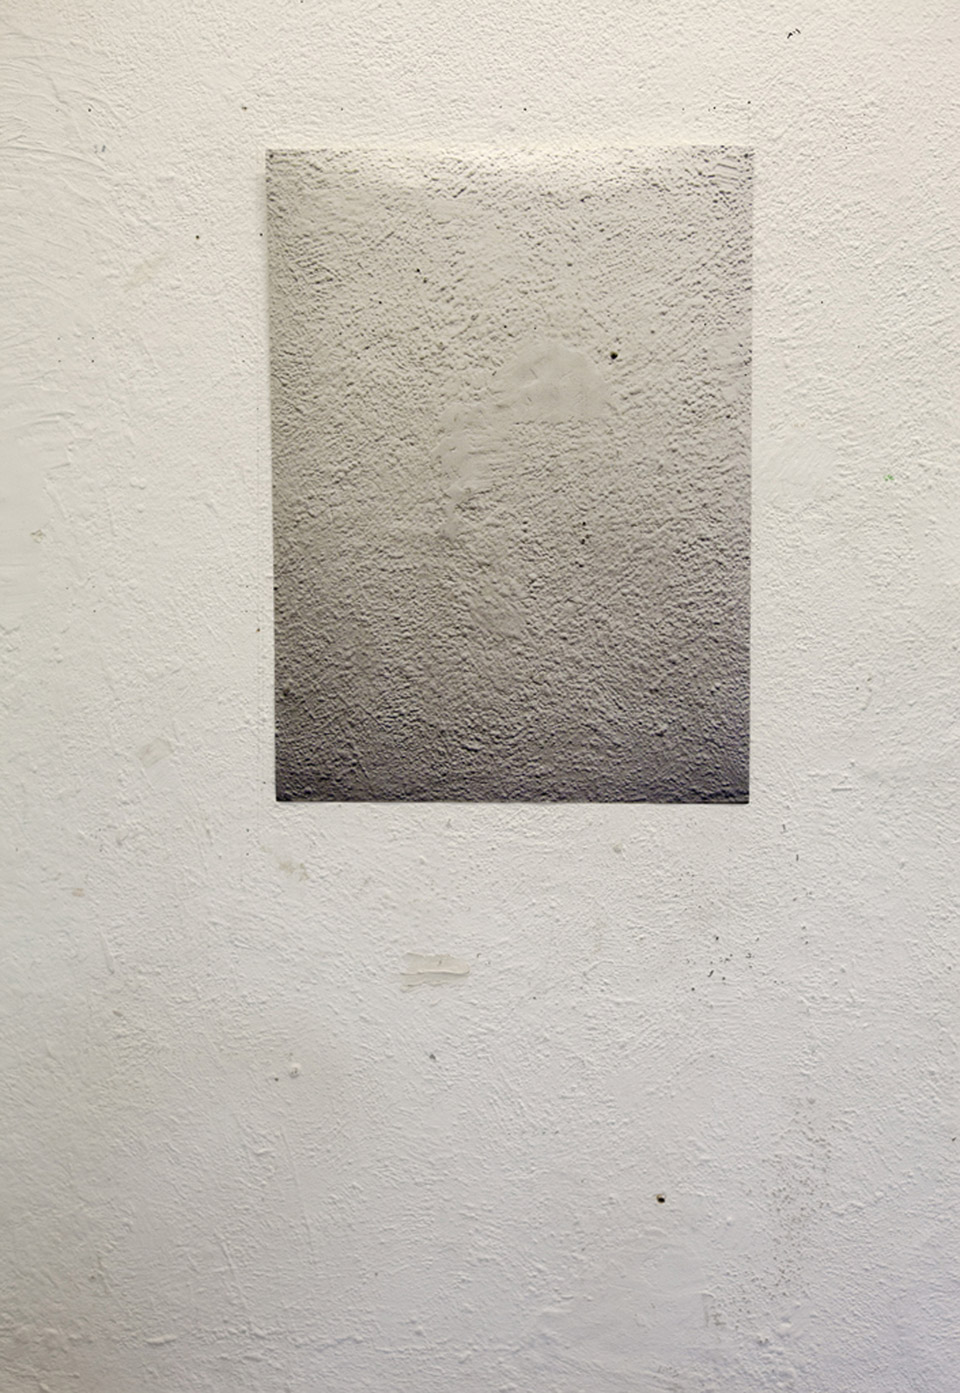 <p>Walp, 2012, inkjet print on Tyvek, 84.1 x 59.4 cm</p>